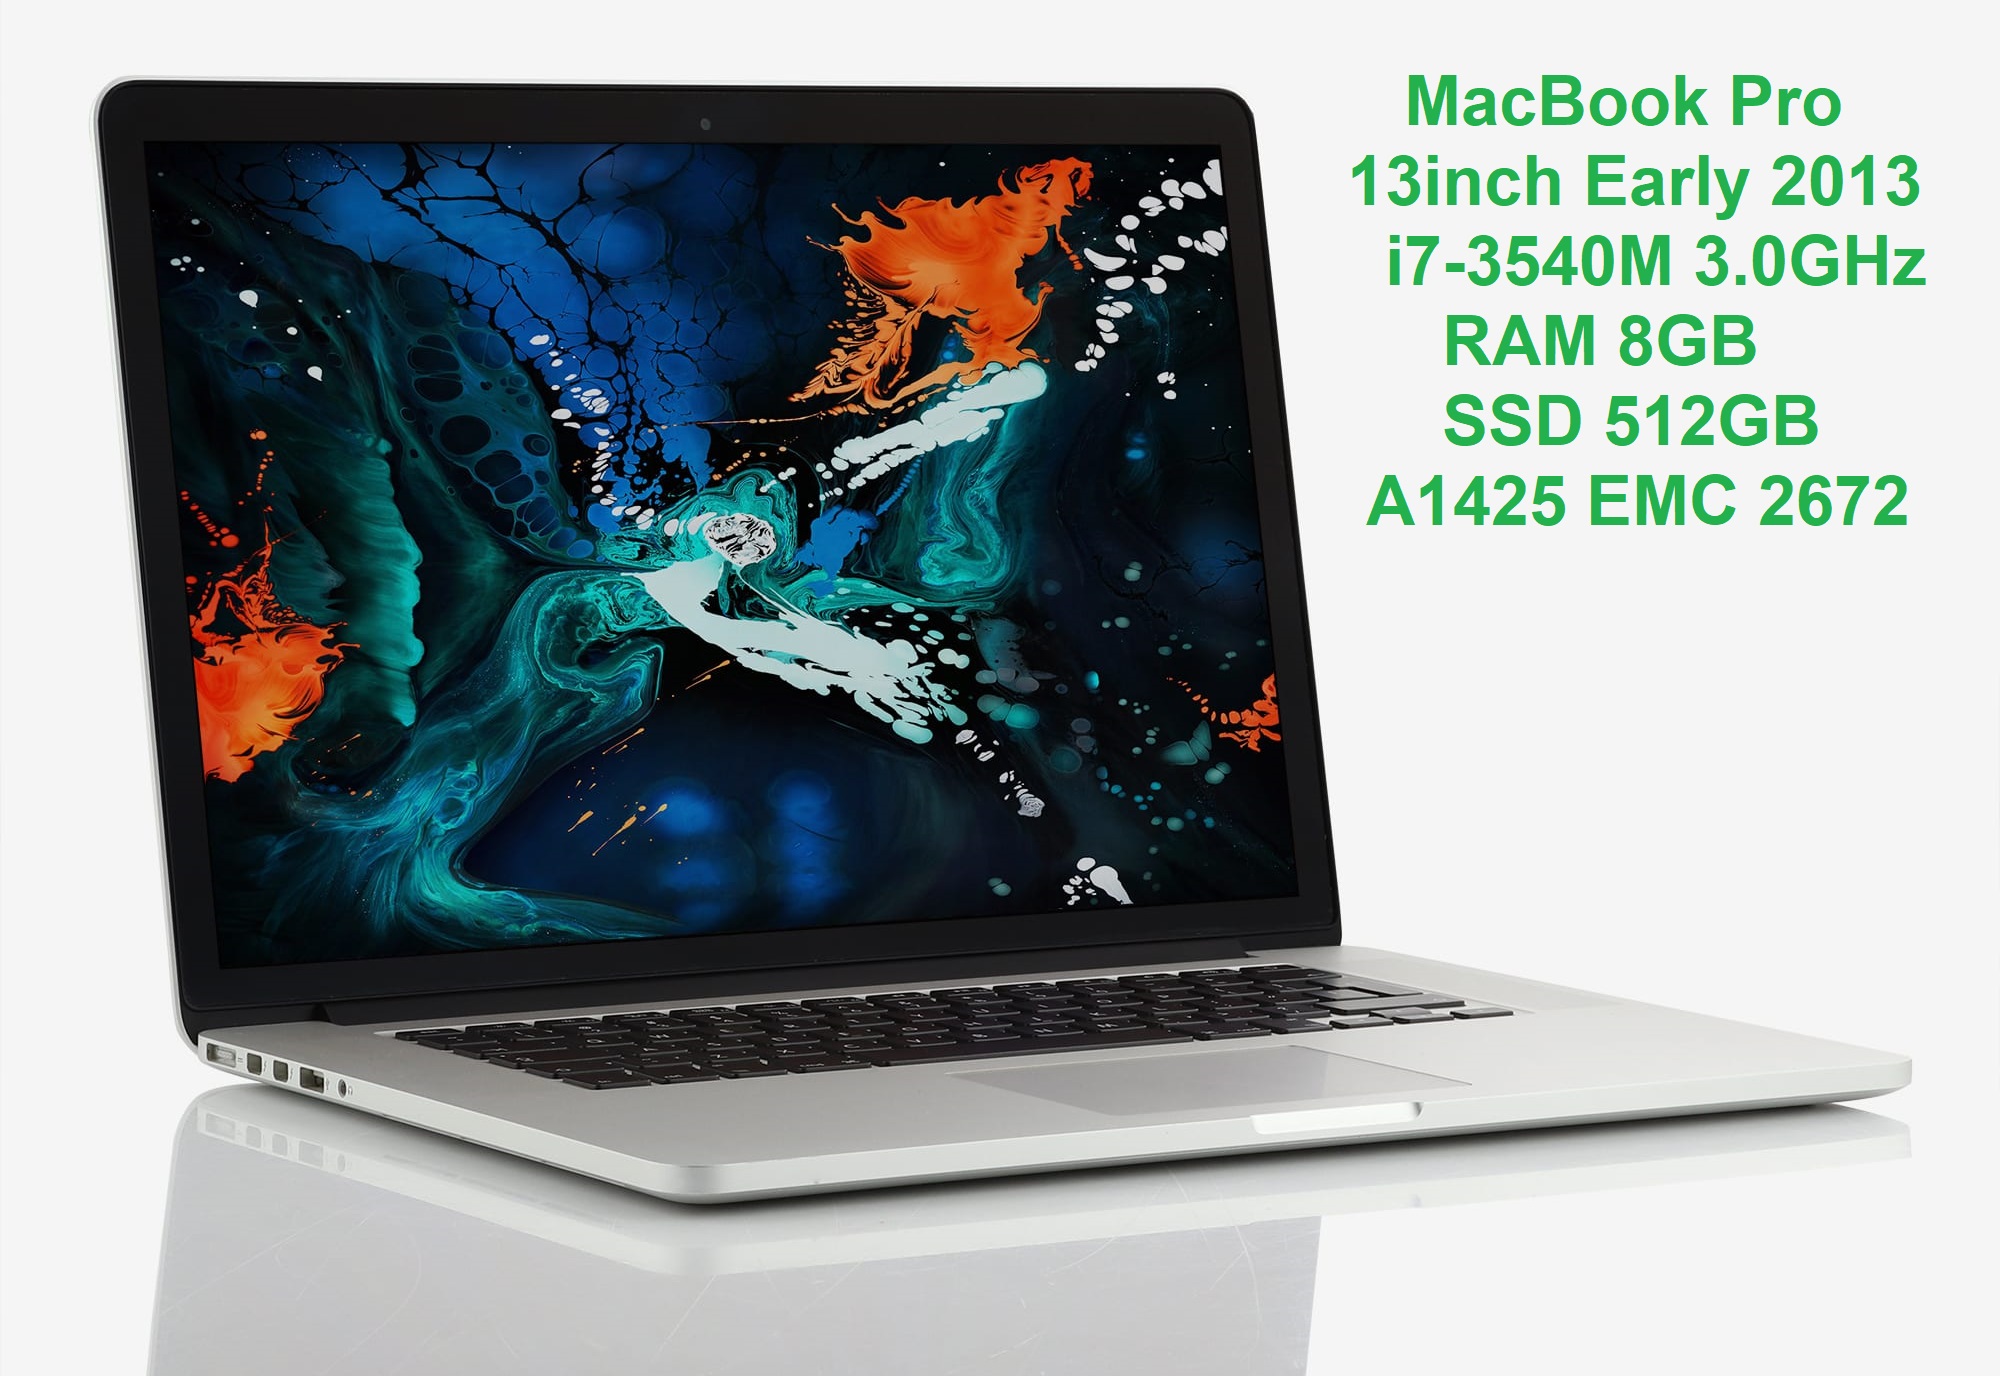 MacBook Pro 13inch Early 2013 Core i7-3540M 3.0GHz RAM 8GB SSD 512GB MacBookPro10,2 A1425 EMC 2672